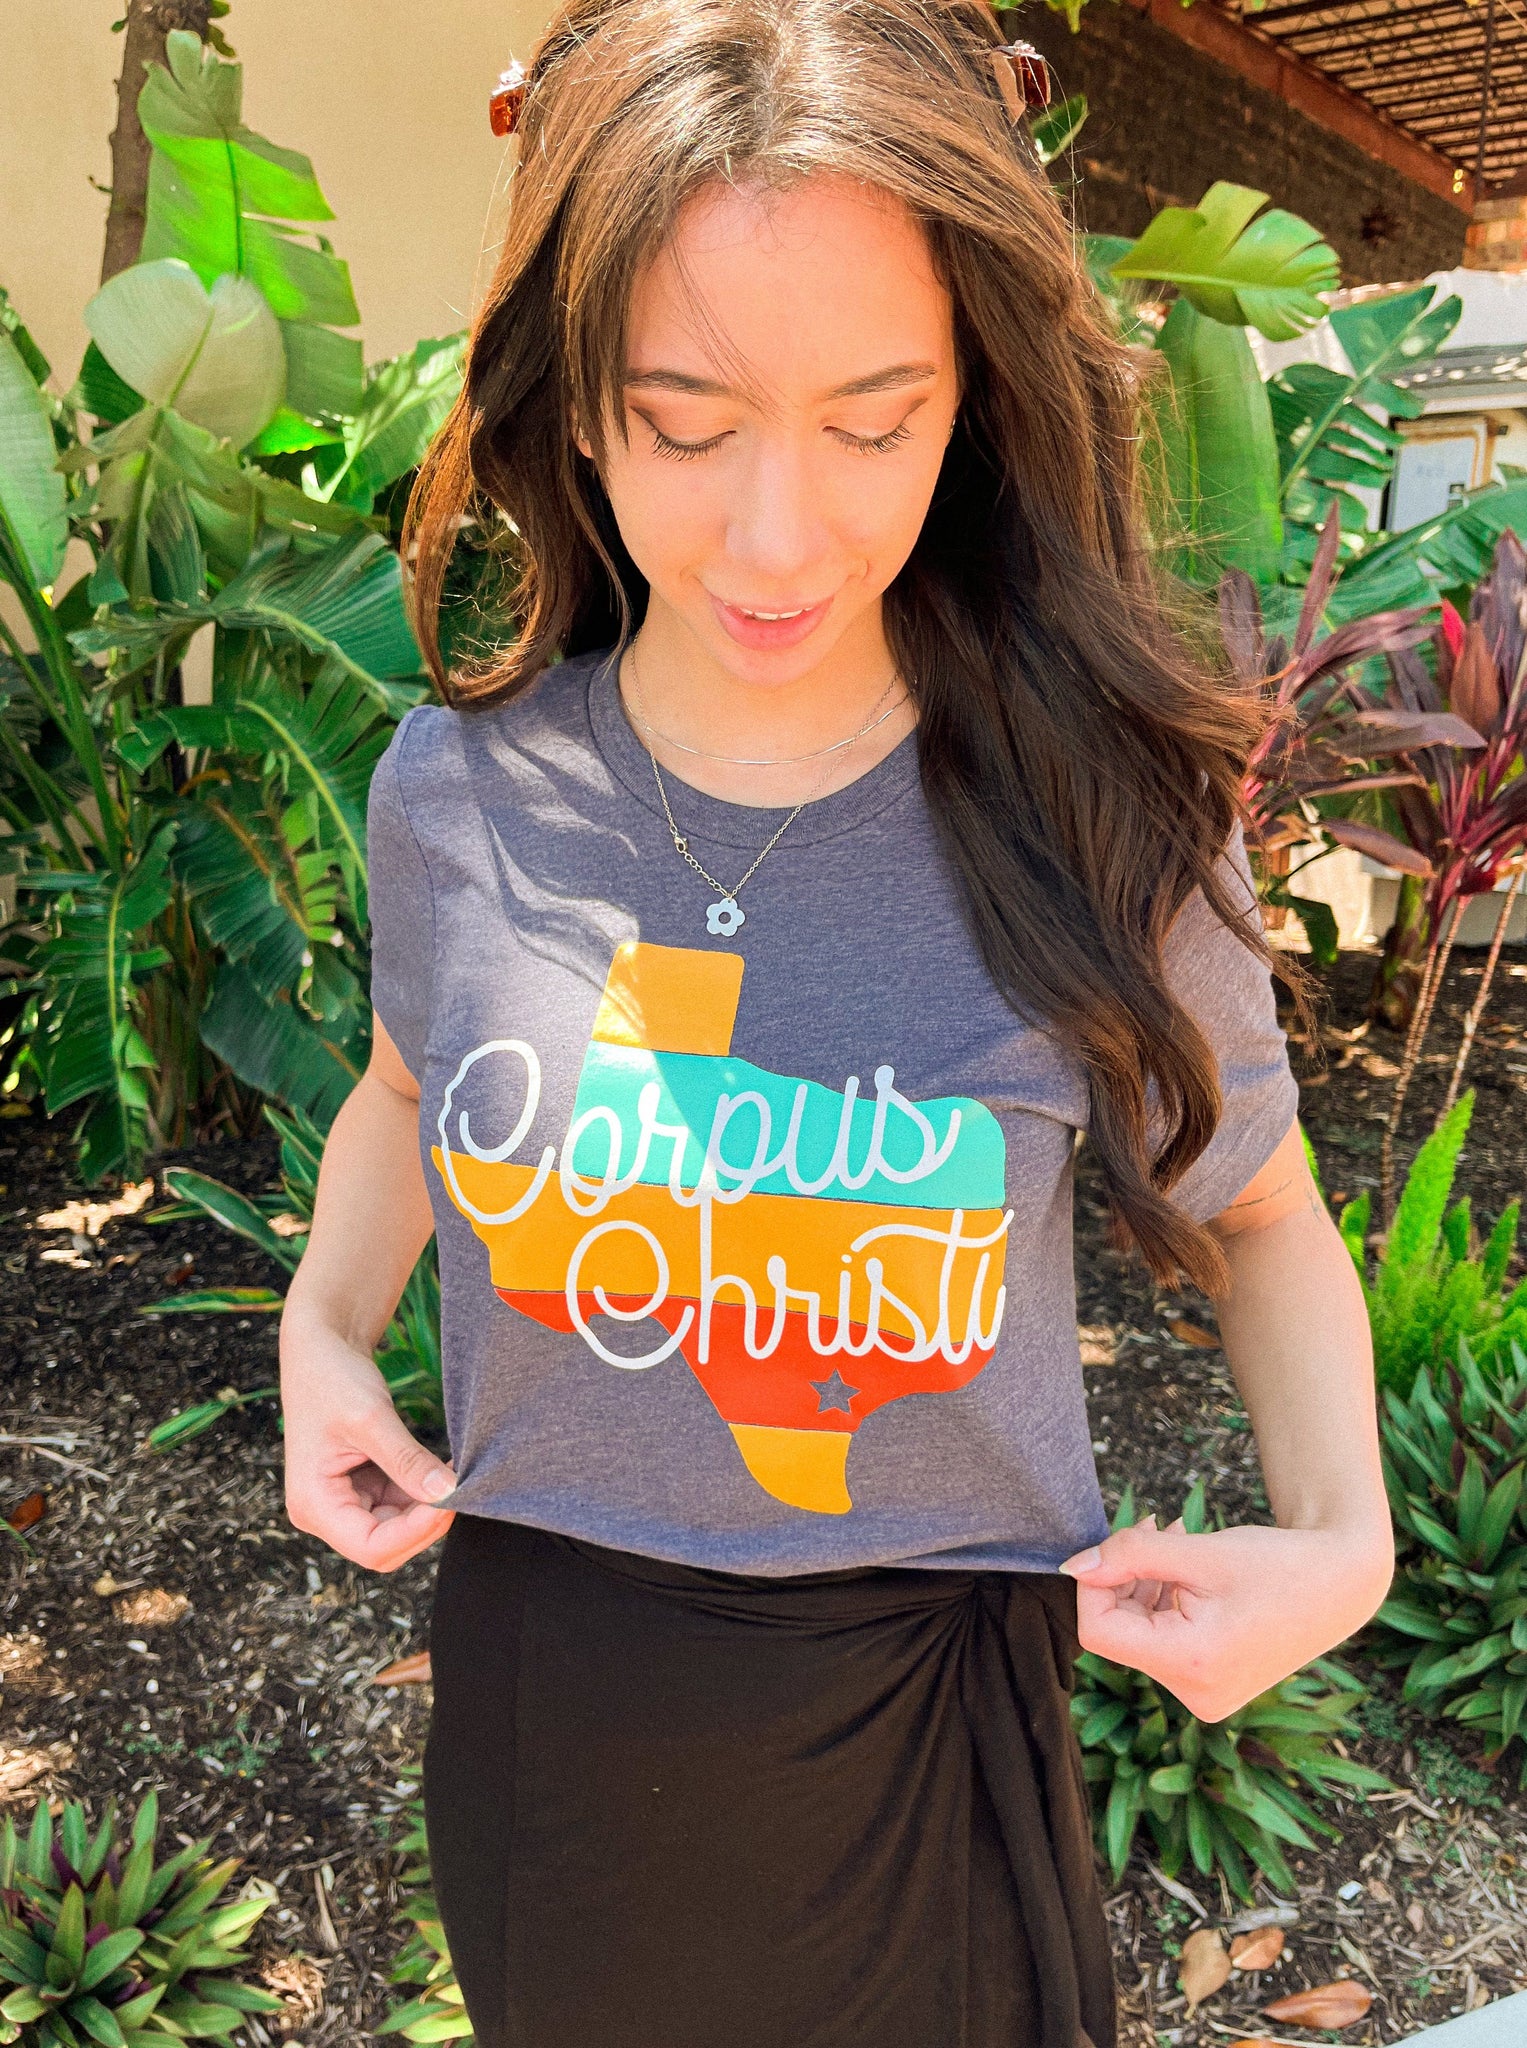 The Corpus Christi Shirt, Unisex Tee